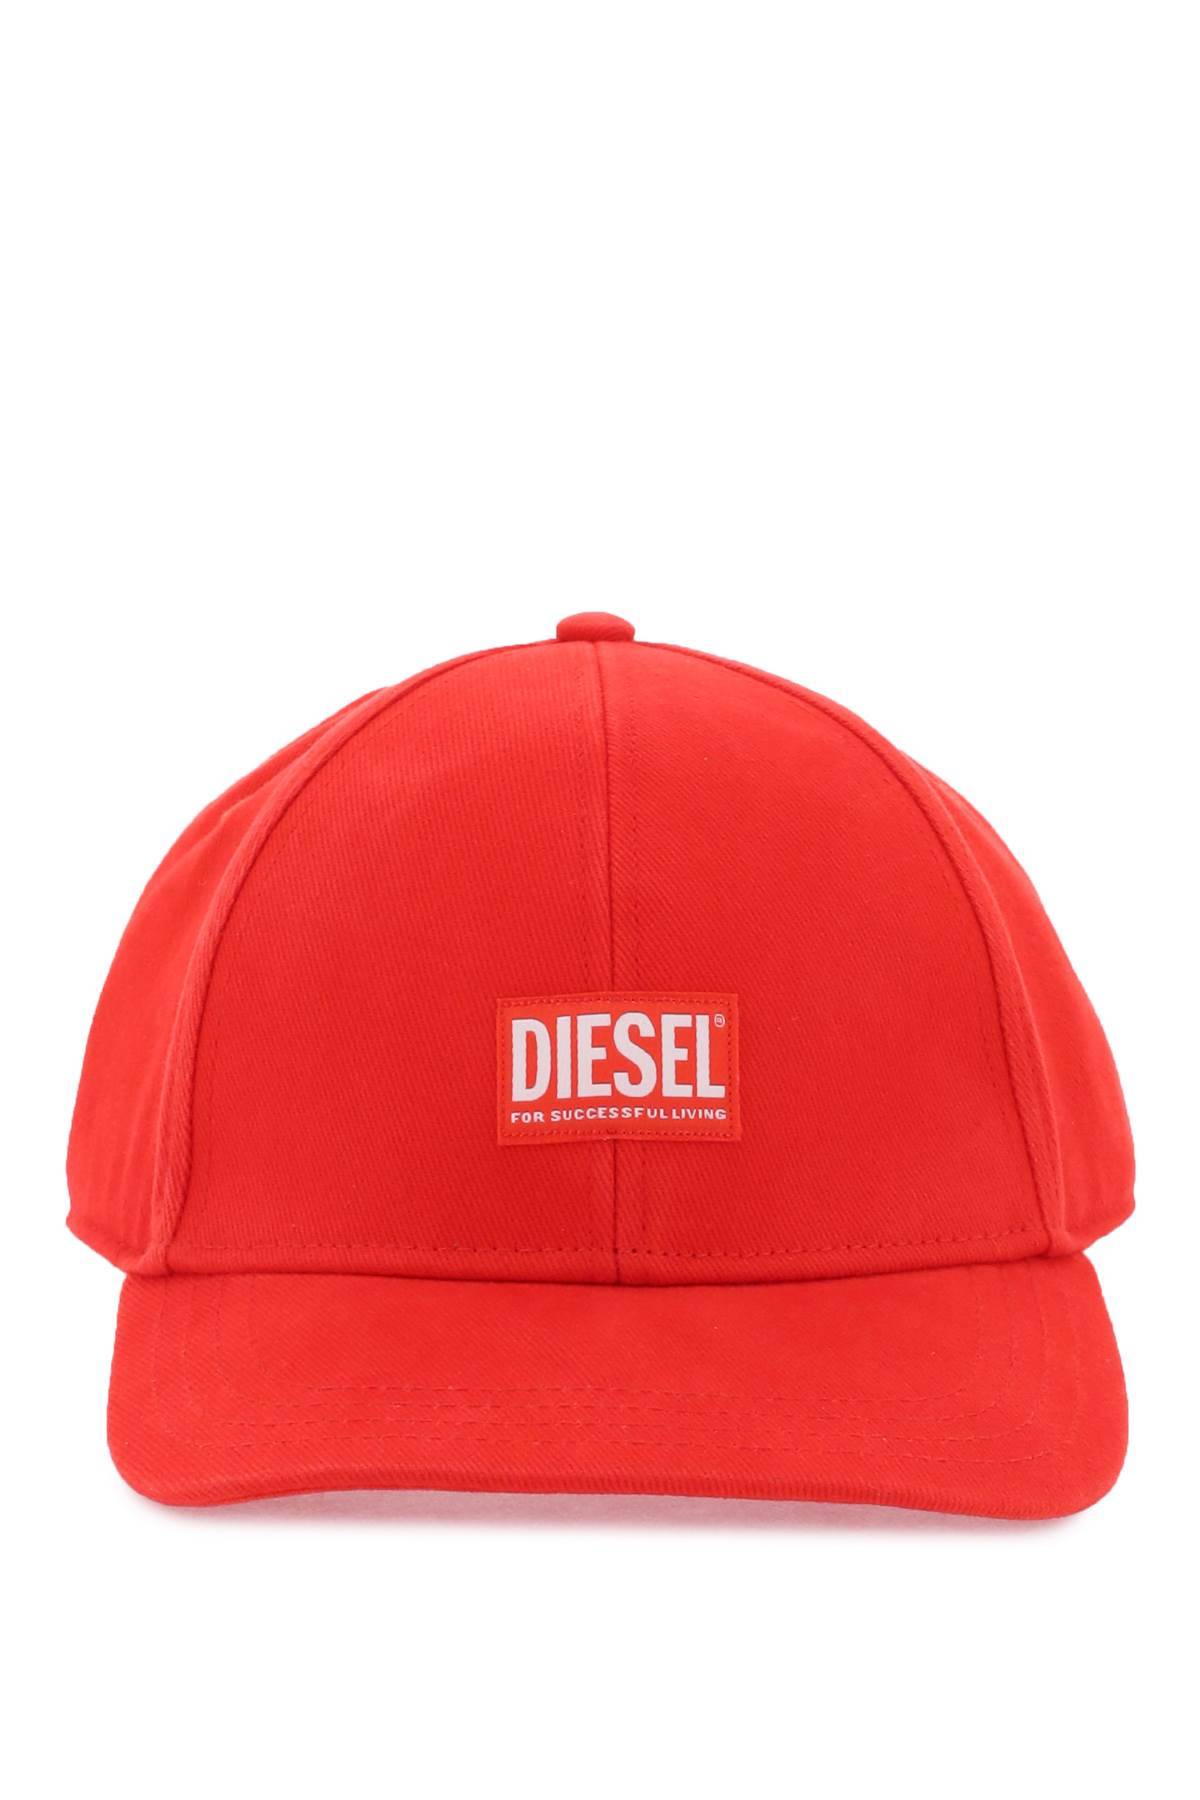 Diesel DIESEL corry-jacq-wash baseball cap